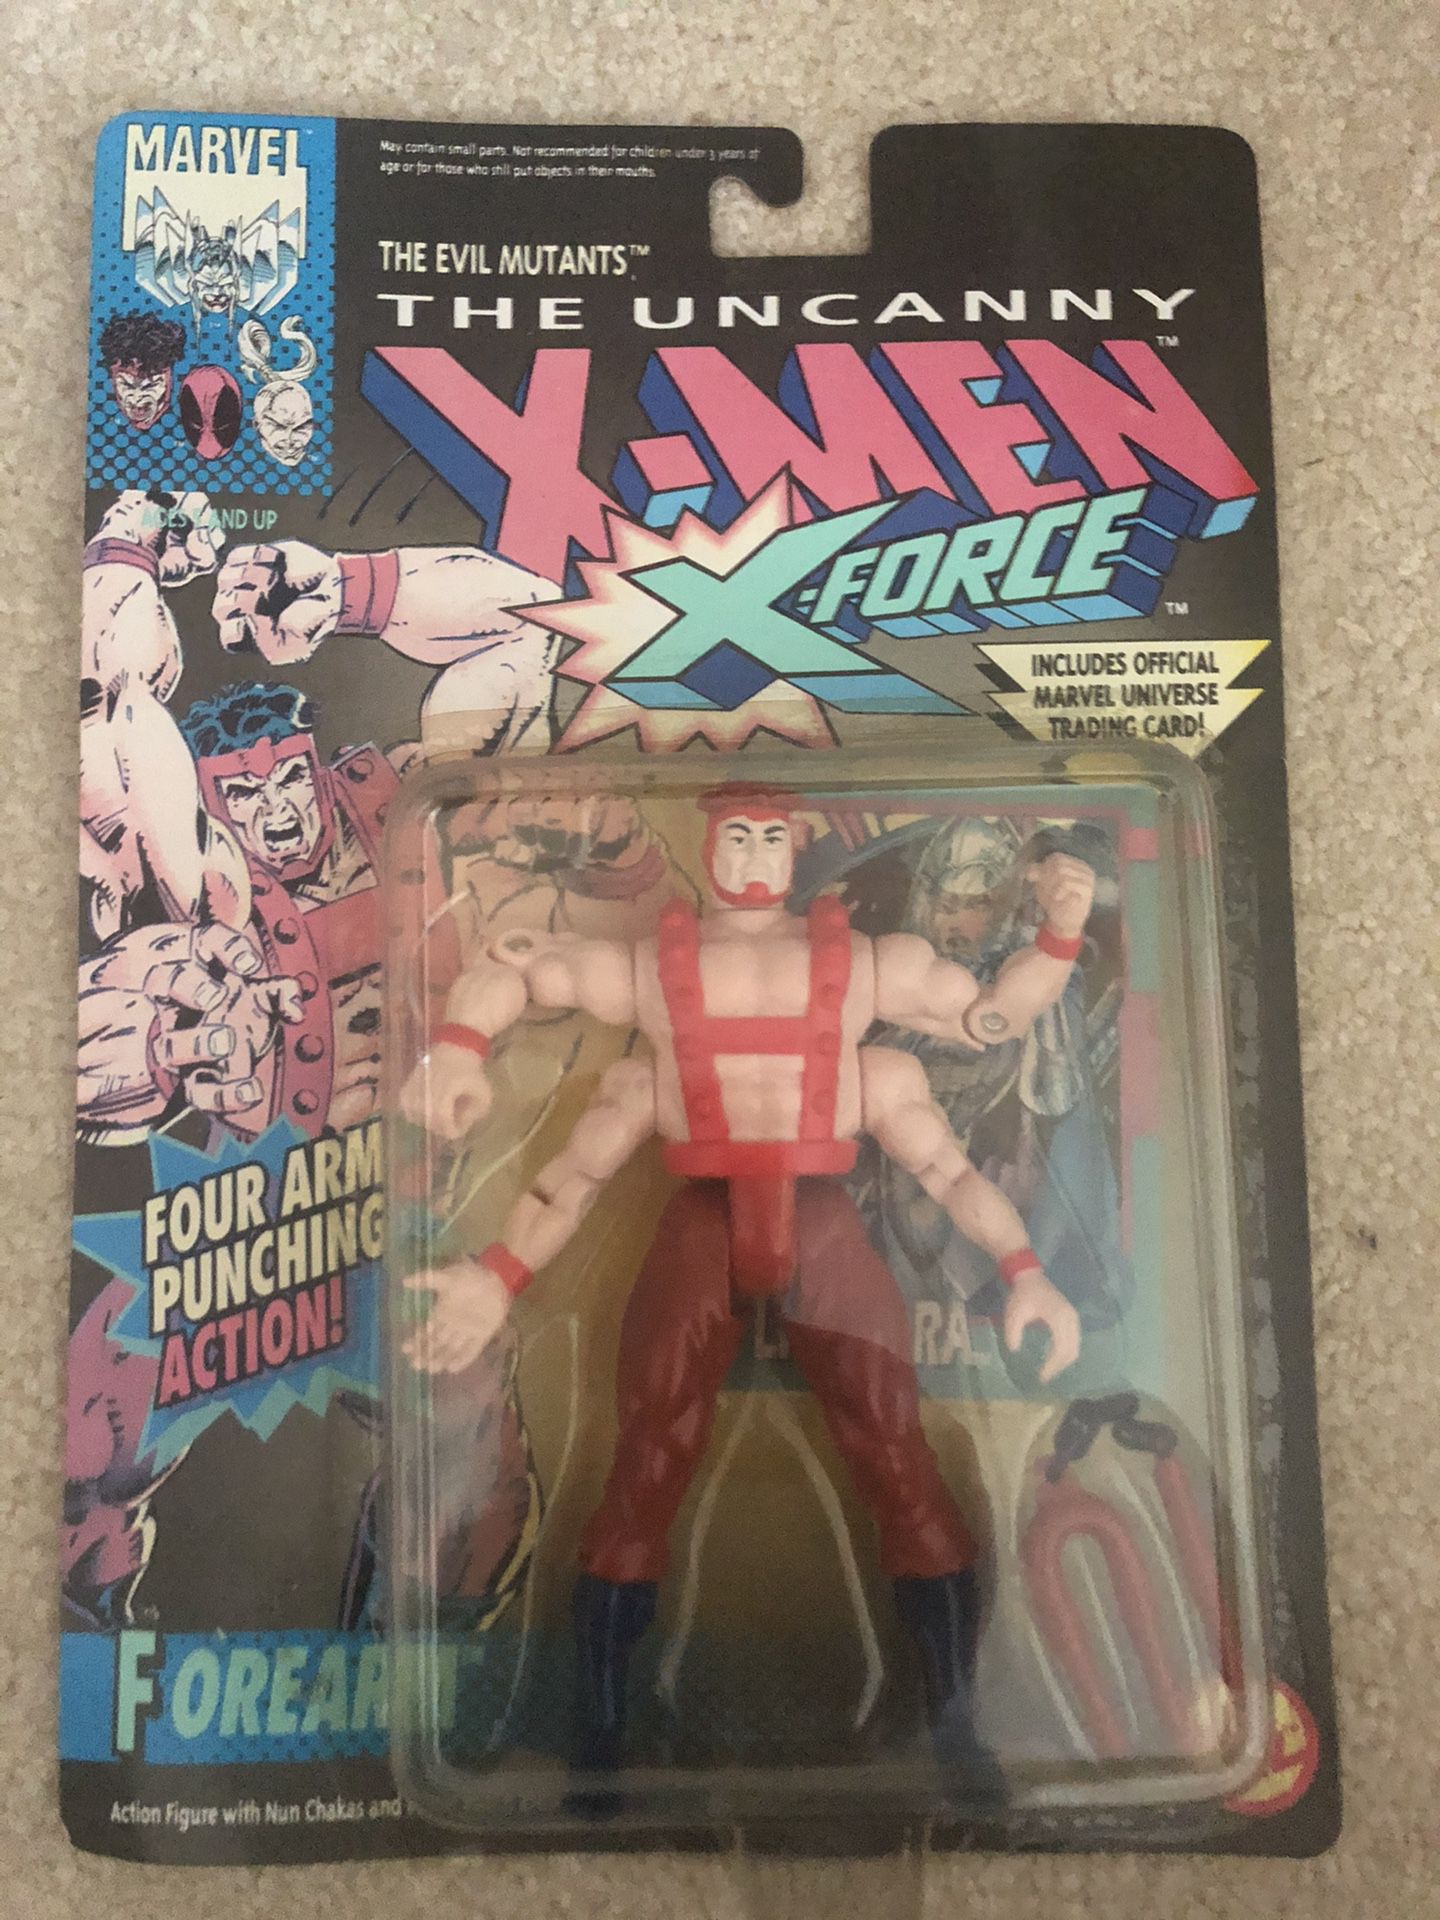 Toybiz X-men X-Force Marvel action figures